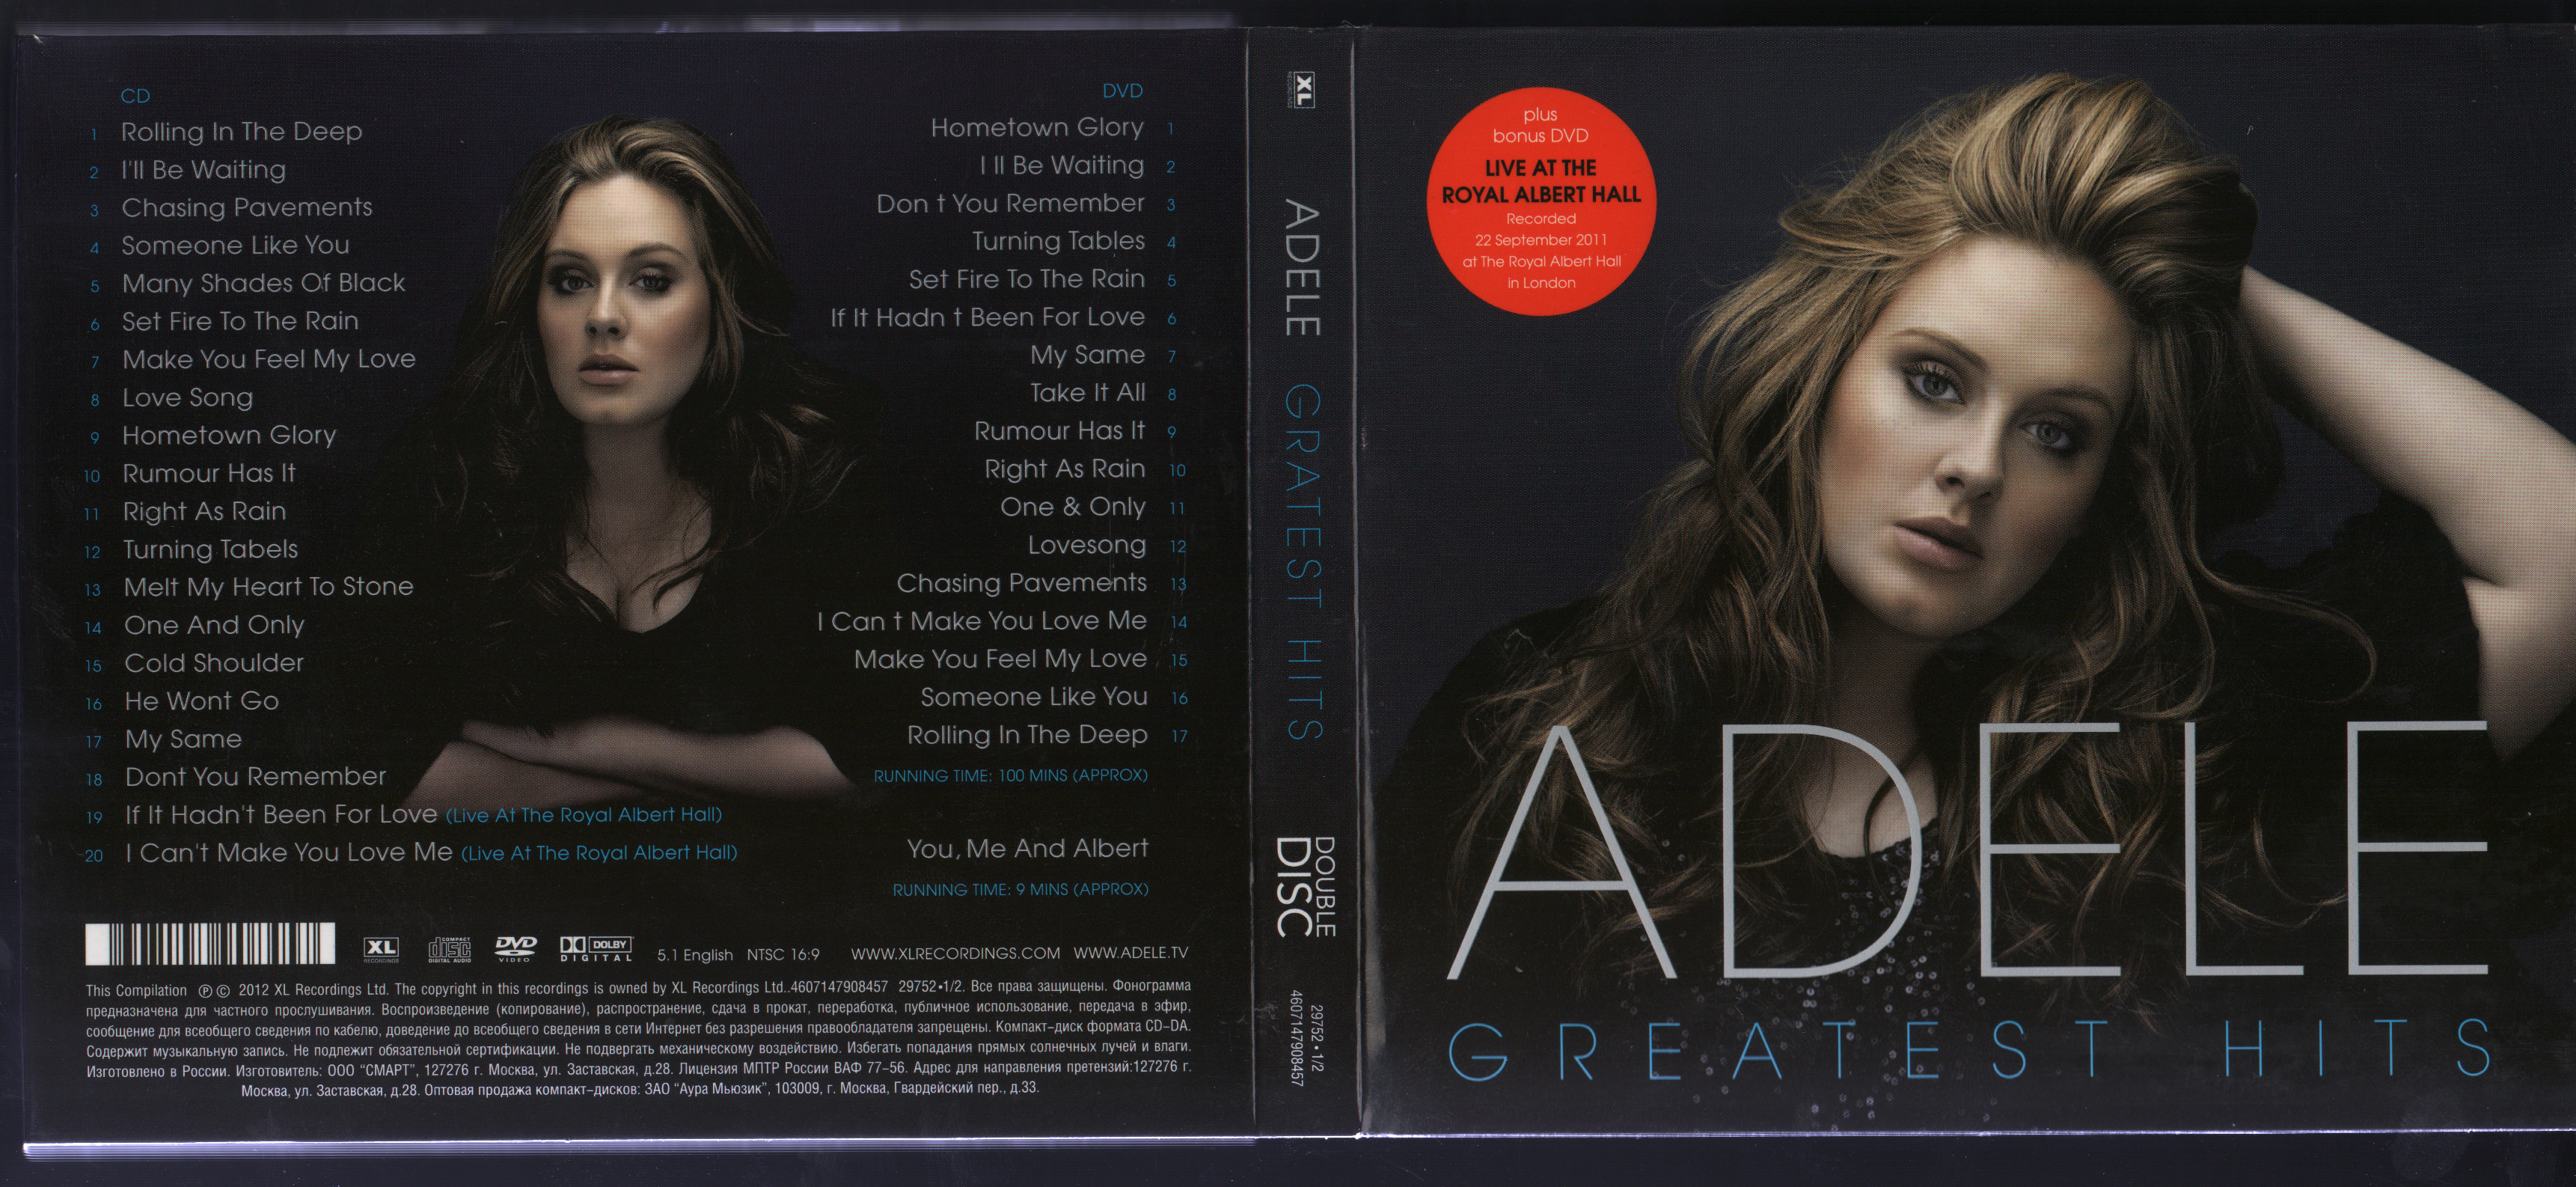 Adele - Greatest Hits 20121 - Back.jpg